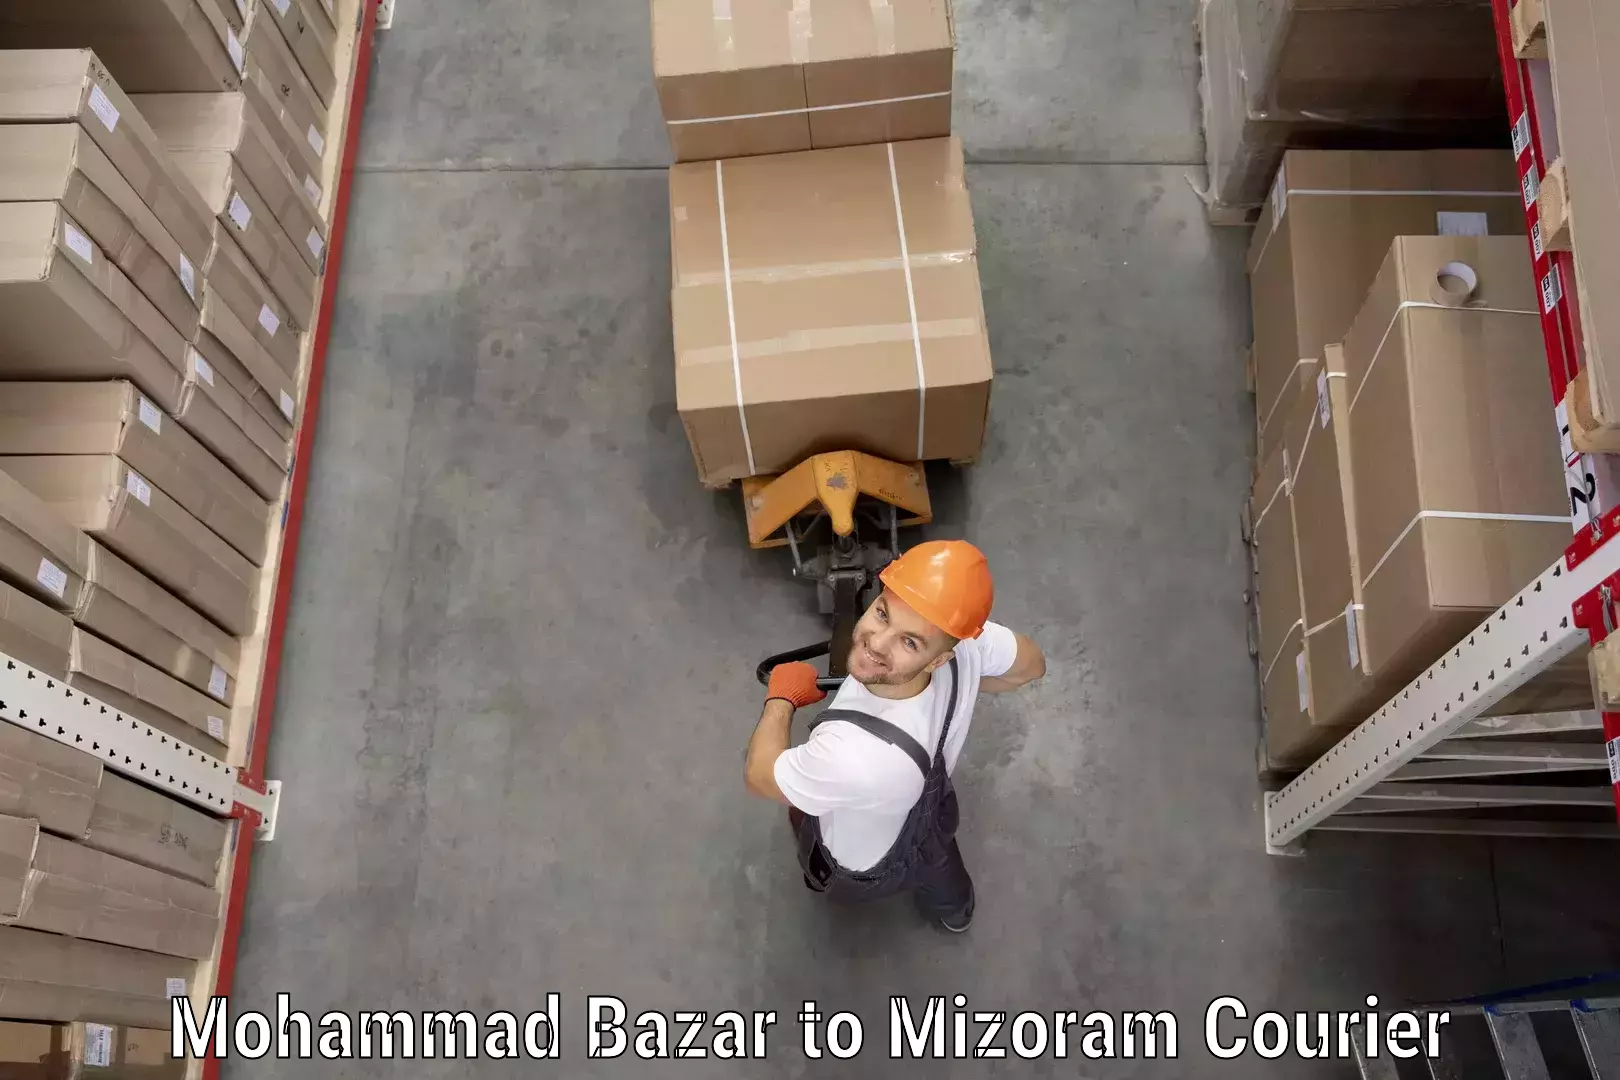 Easy access courier services Mohammad Bazar to Mizoram